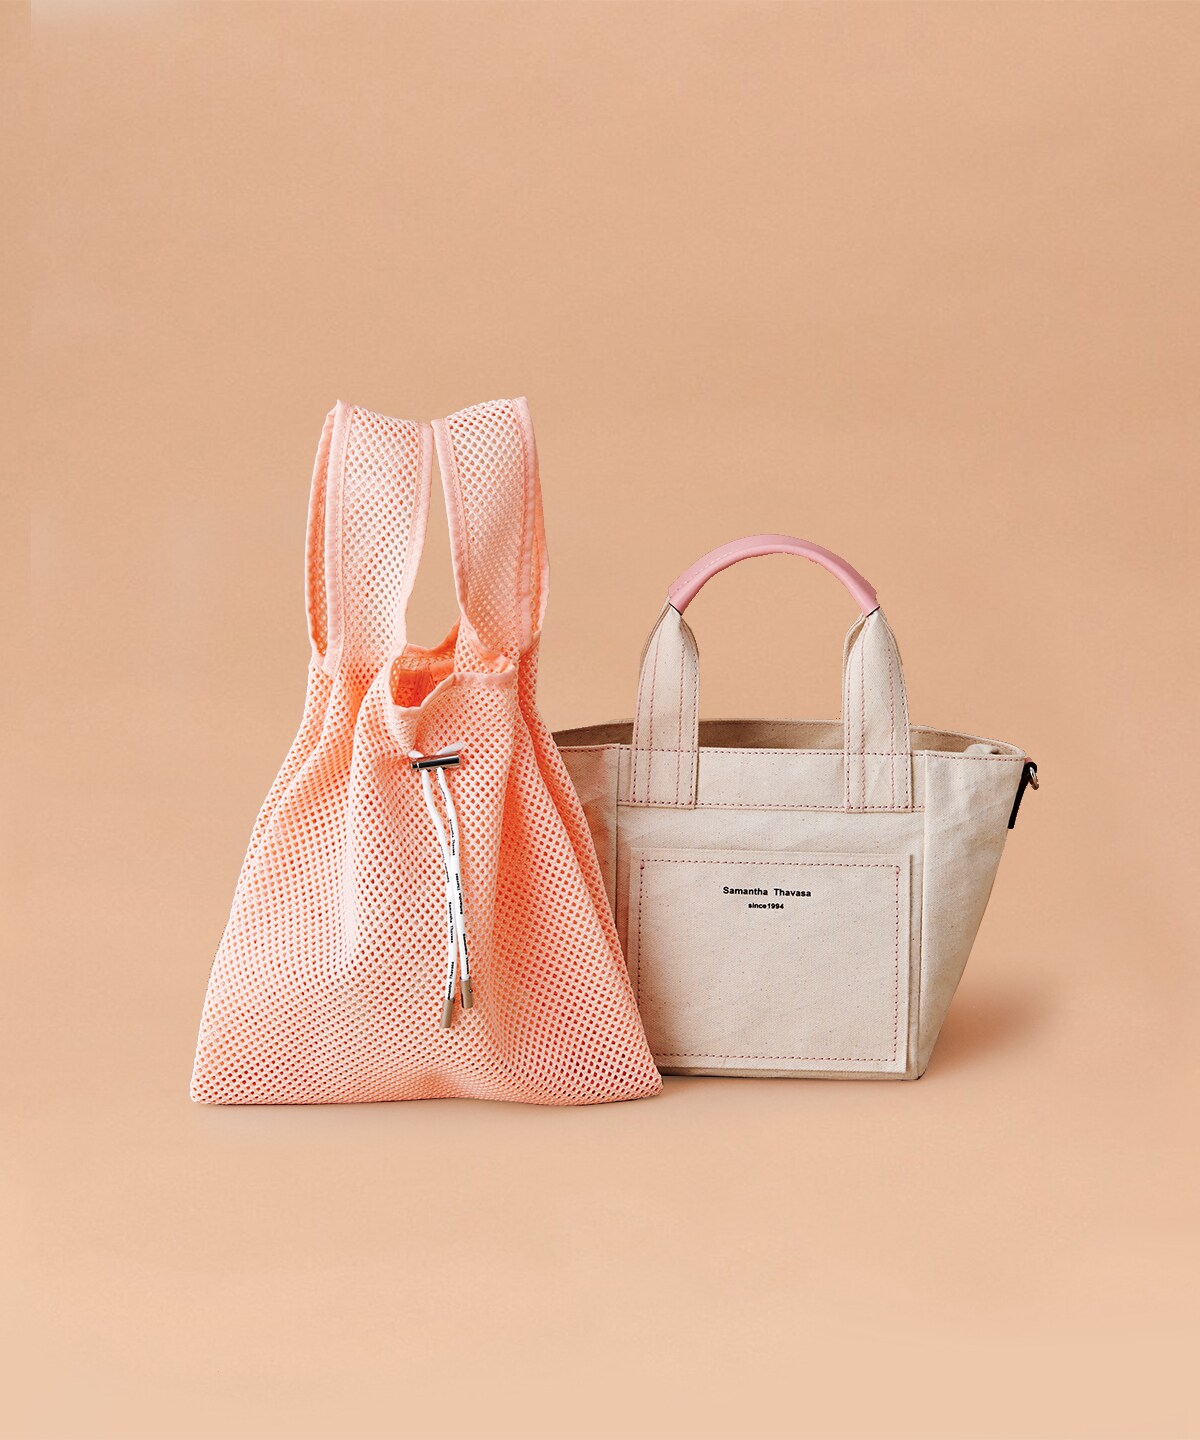 Dream bag for キャンバストートⅡ 小サイズ(FREE ピンク): Samantha 